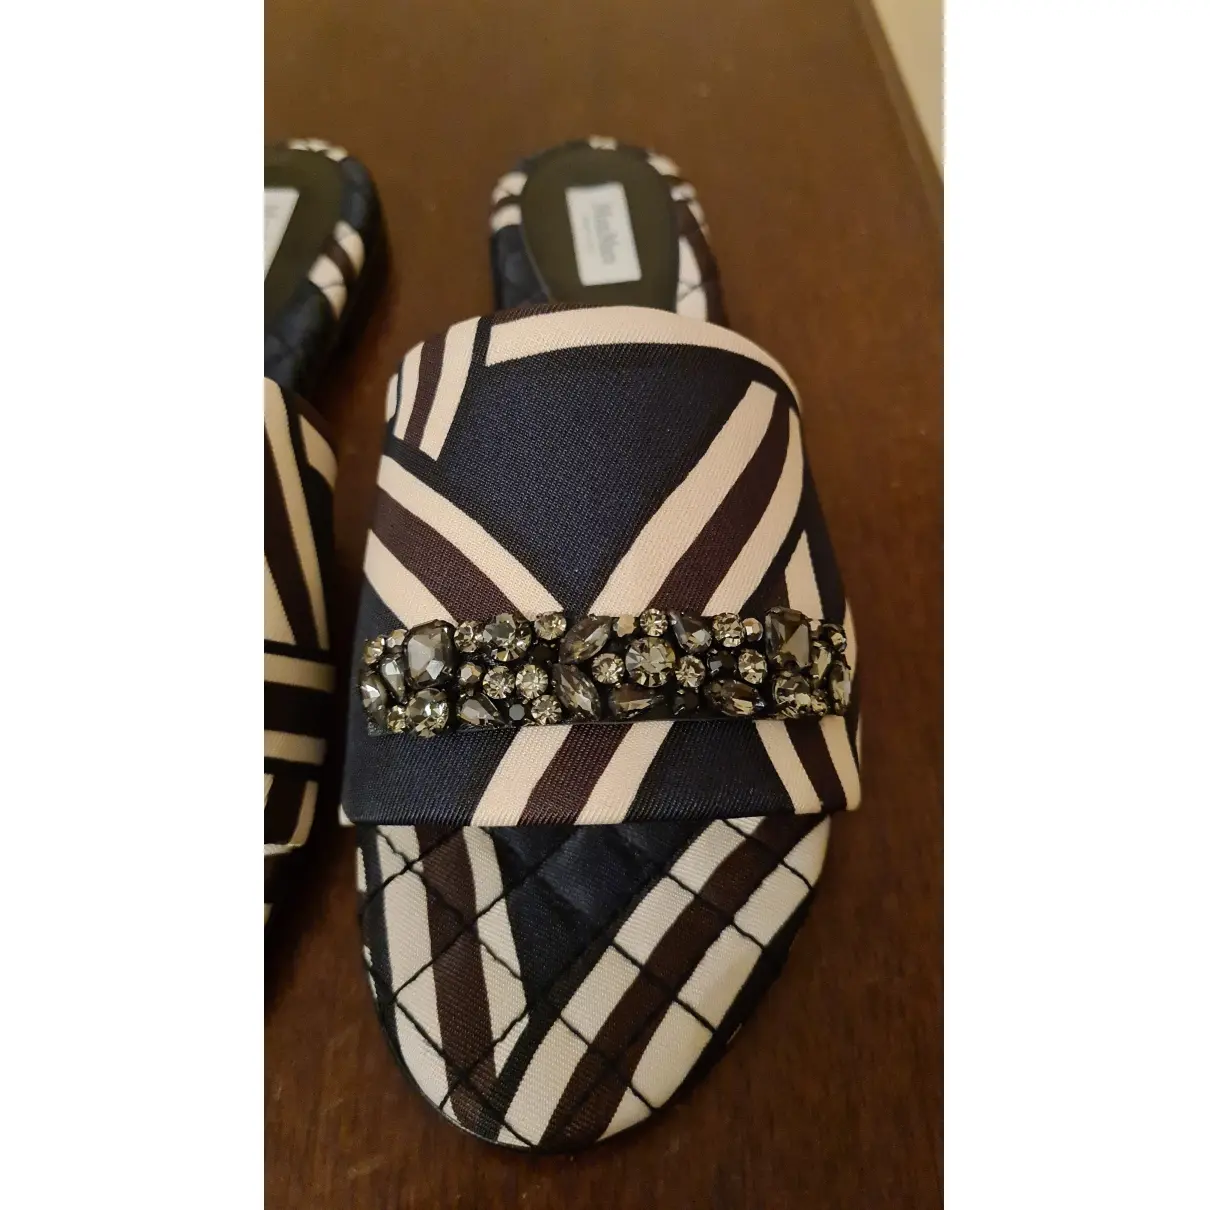 Luxury Max Mara Sandals Women